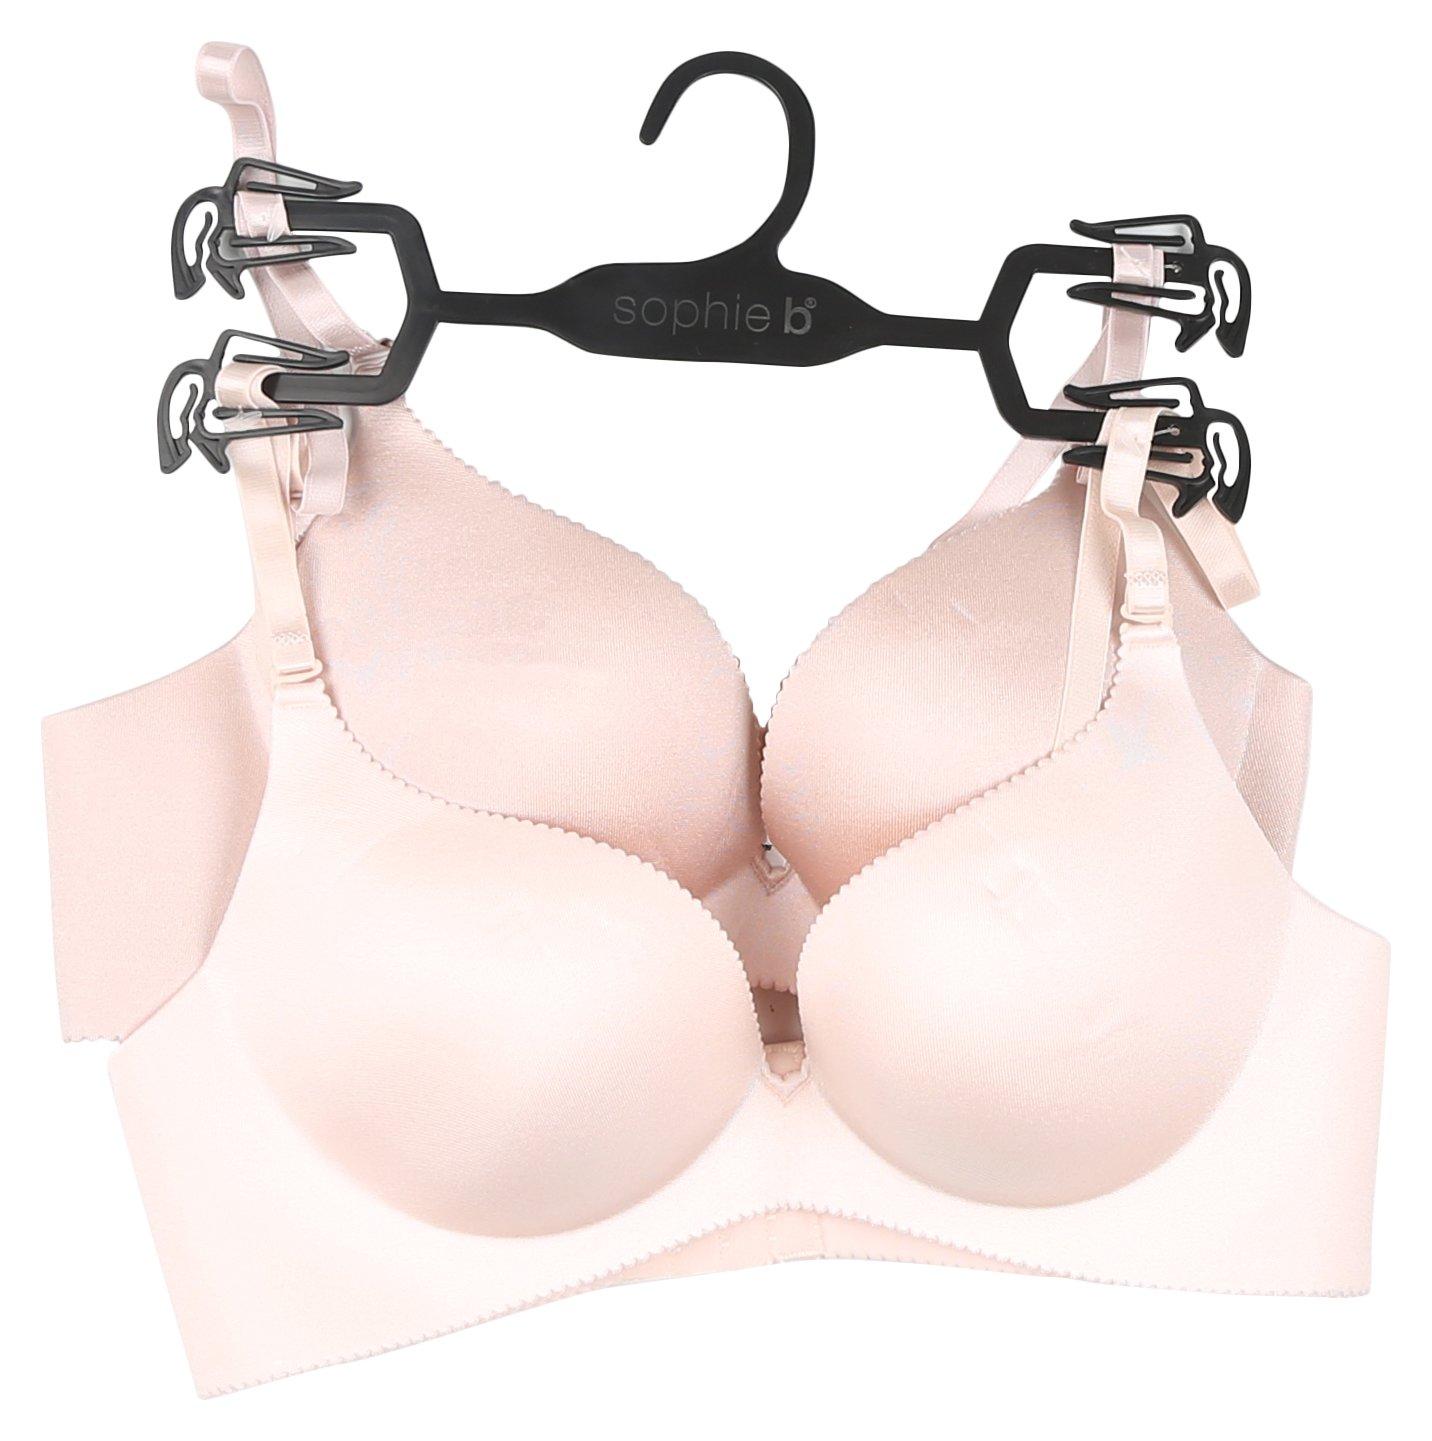 DKNY women's 2 pack seamless bra S